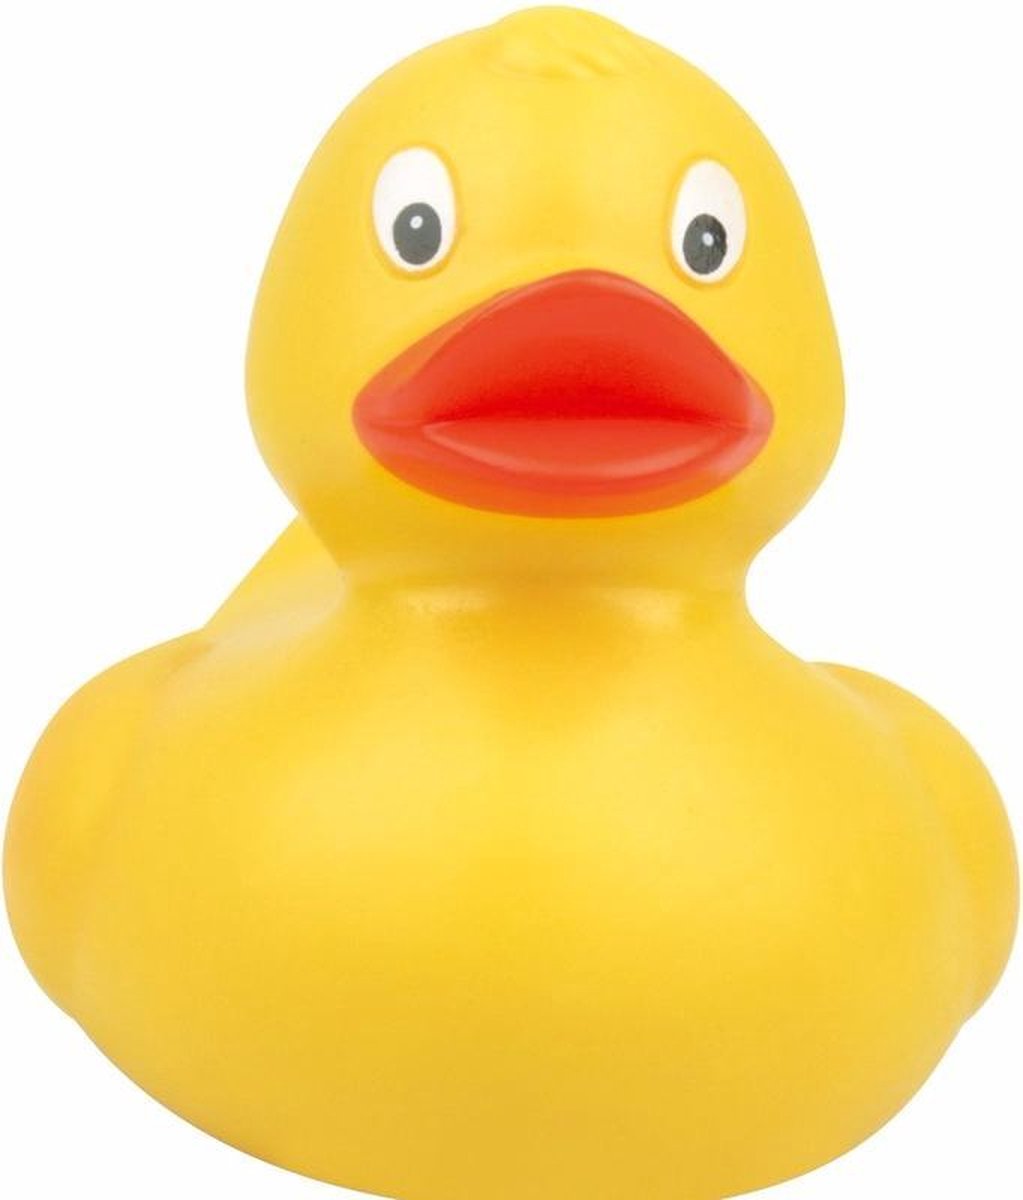 Classic yellow duck